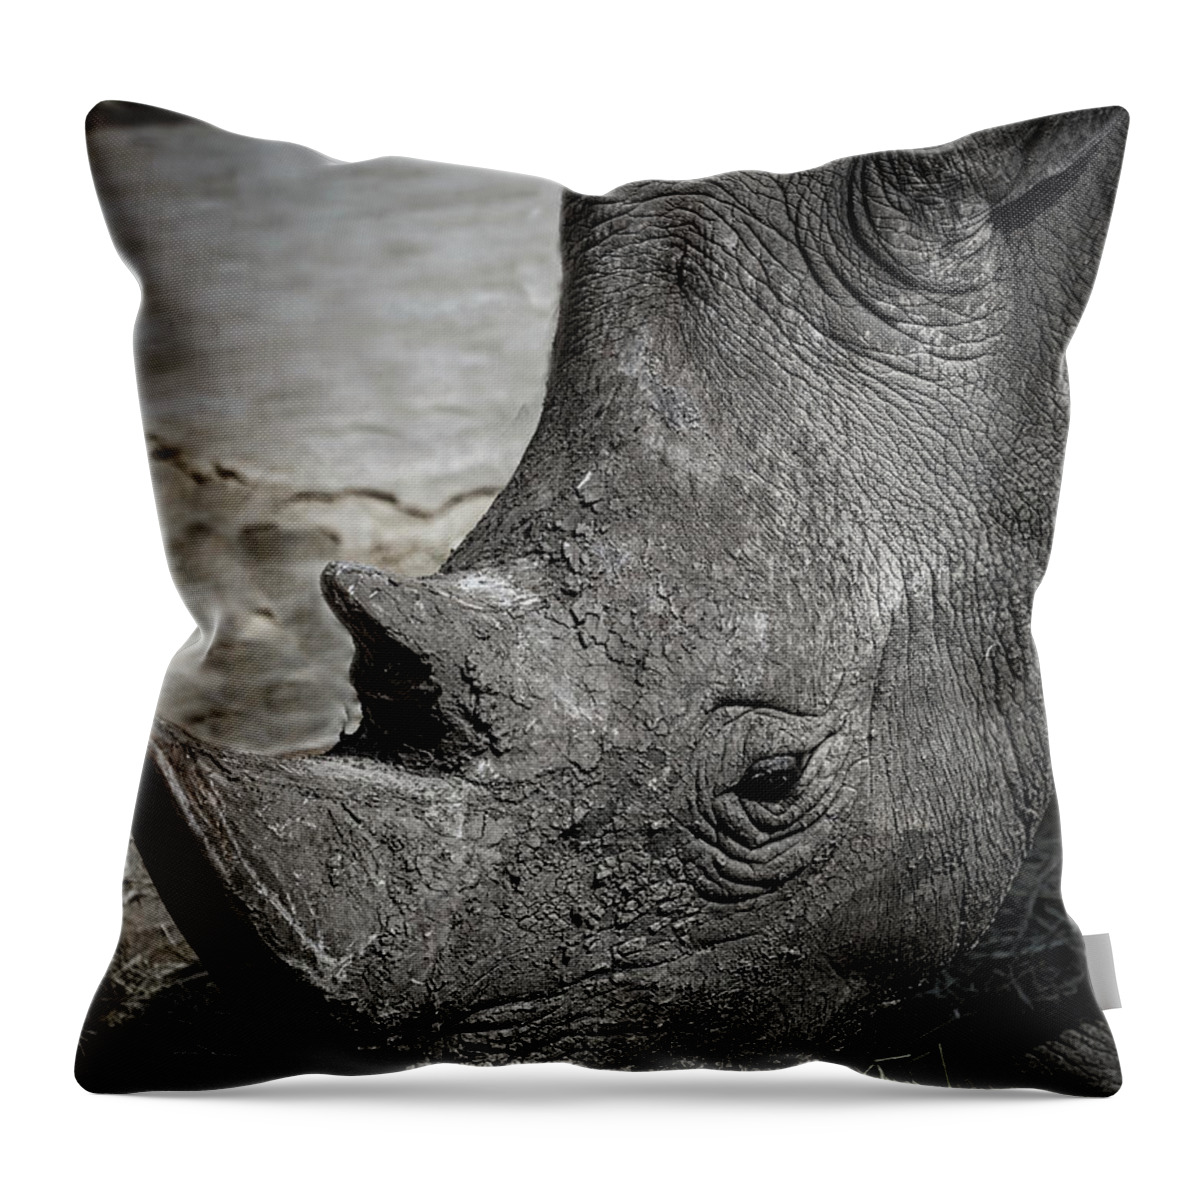 Rhinoceros Throw Pillow featuring the photograph White Rhino by Rene Vasquez